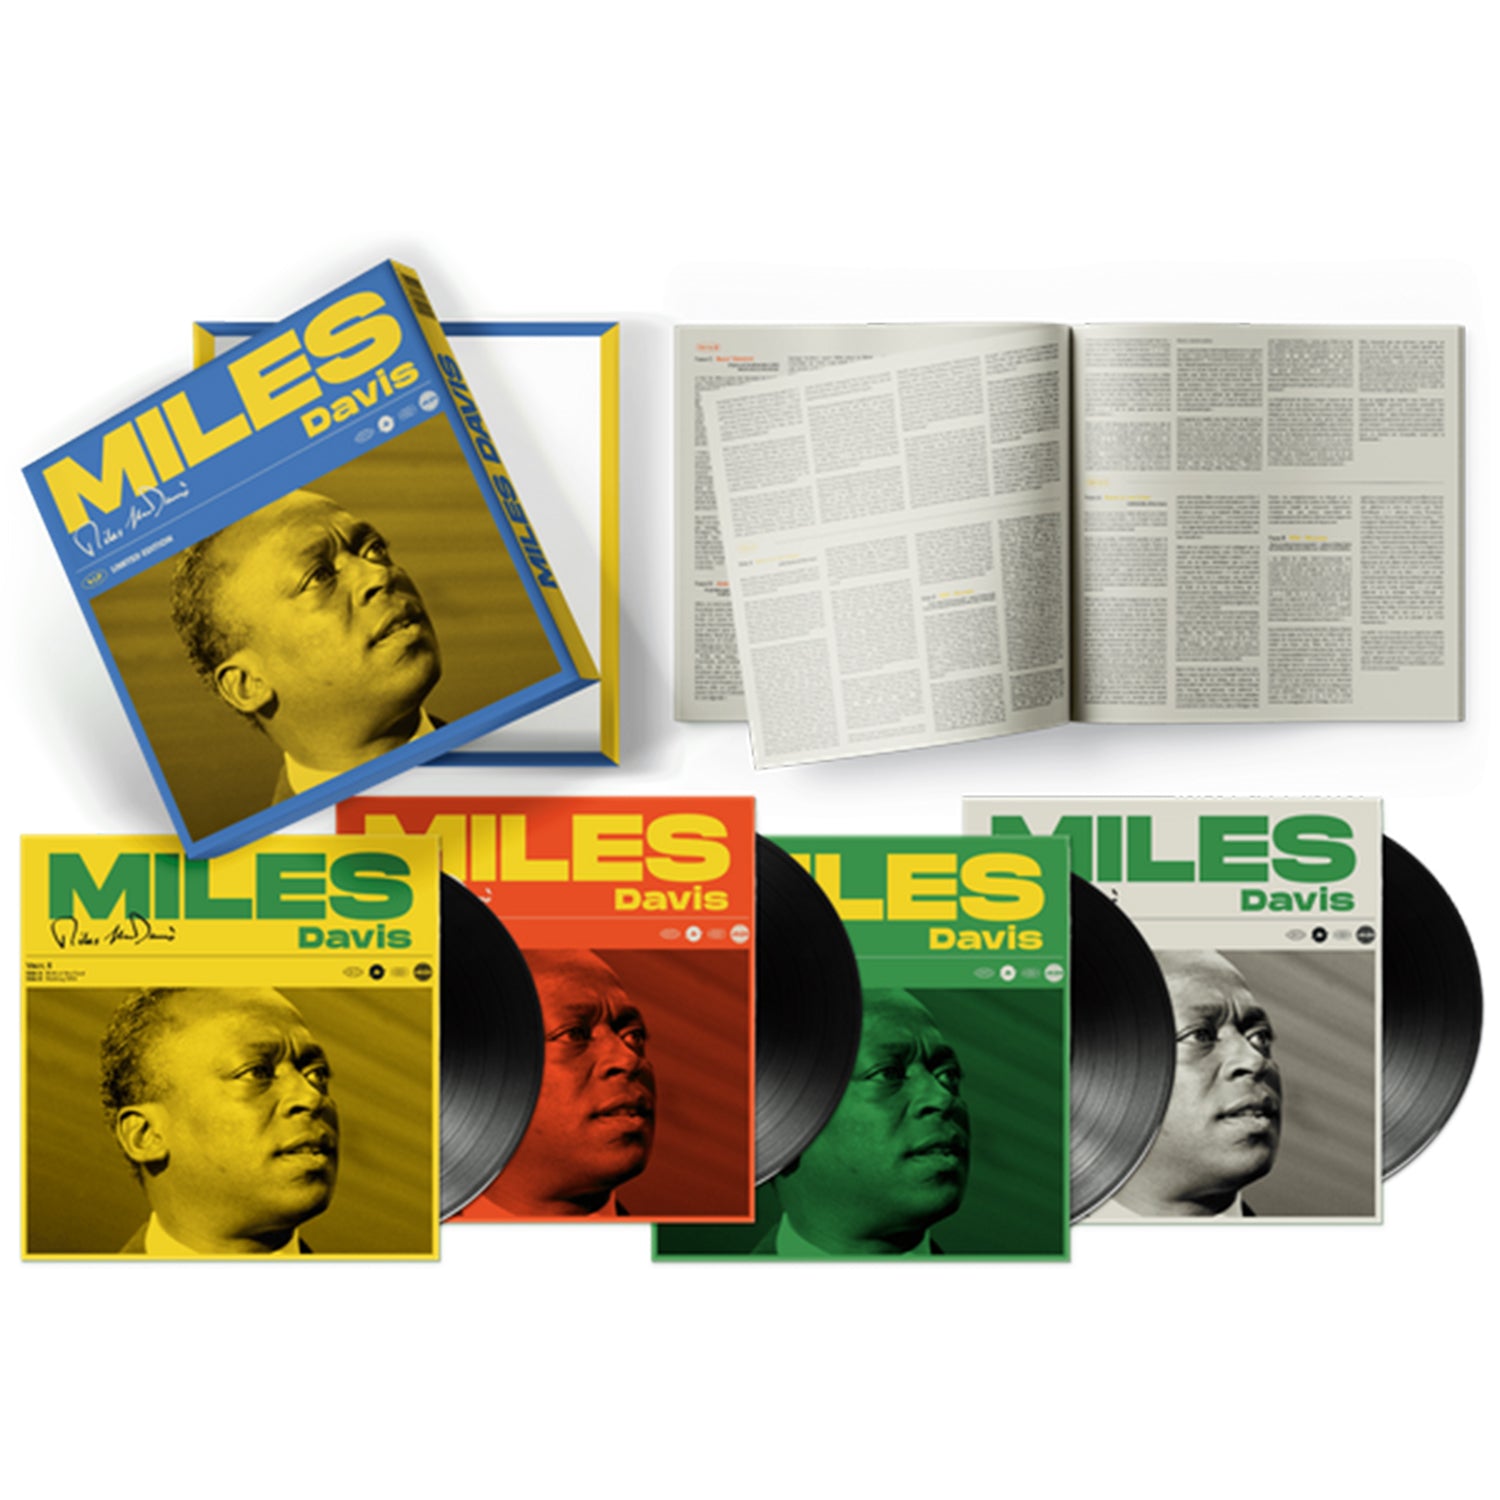 MILES DAVIS - Monuments - 4LP - Limited 180g Vinyl Boxset